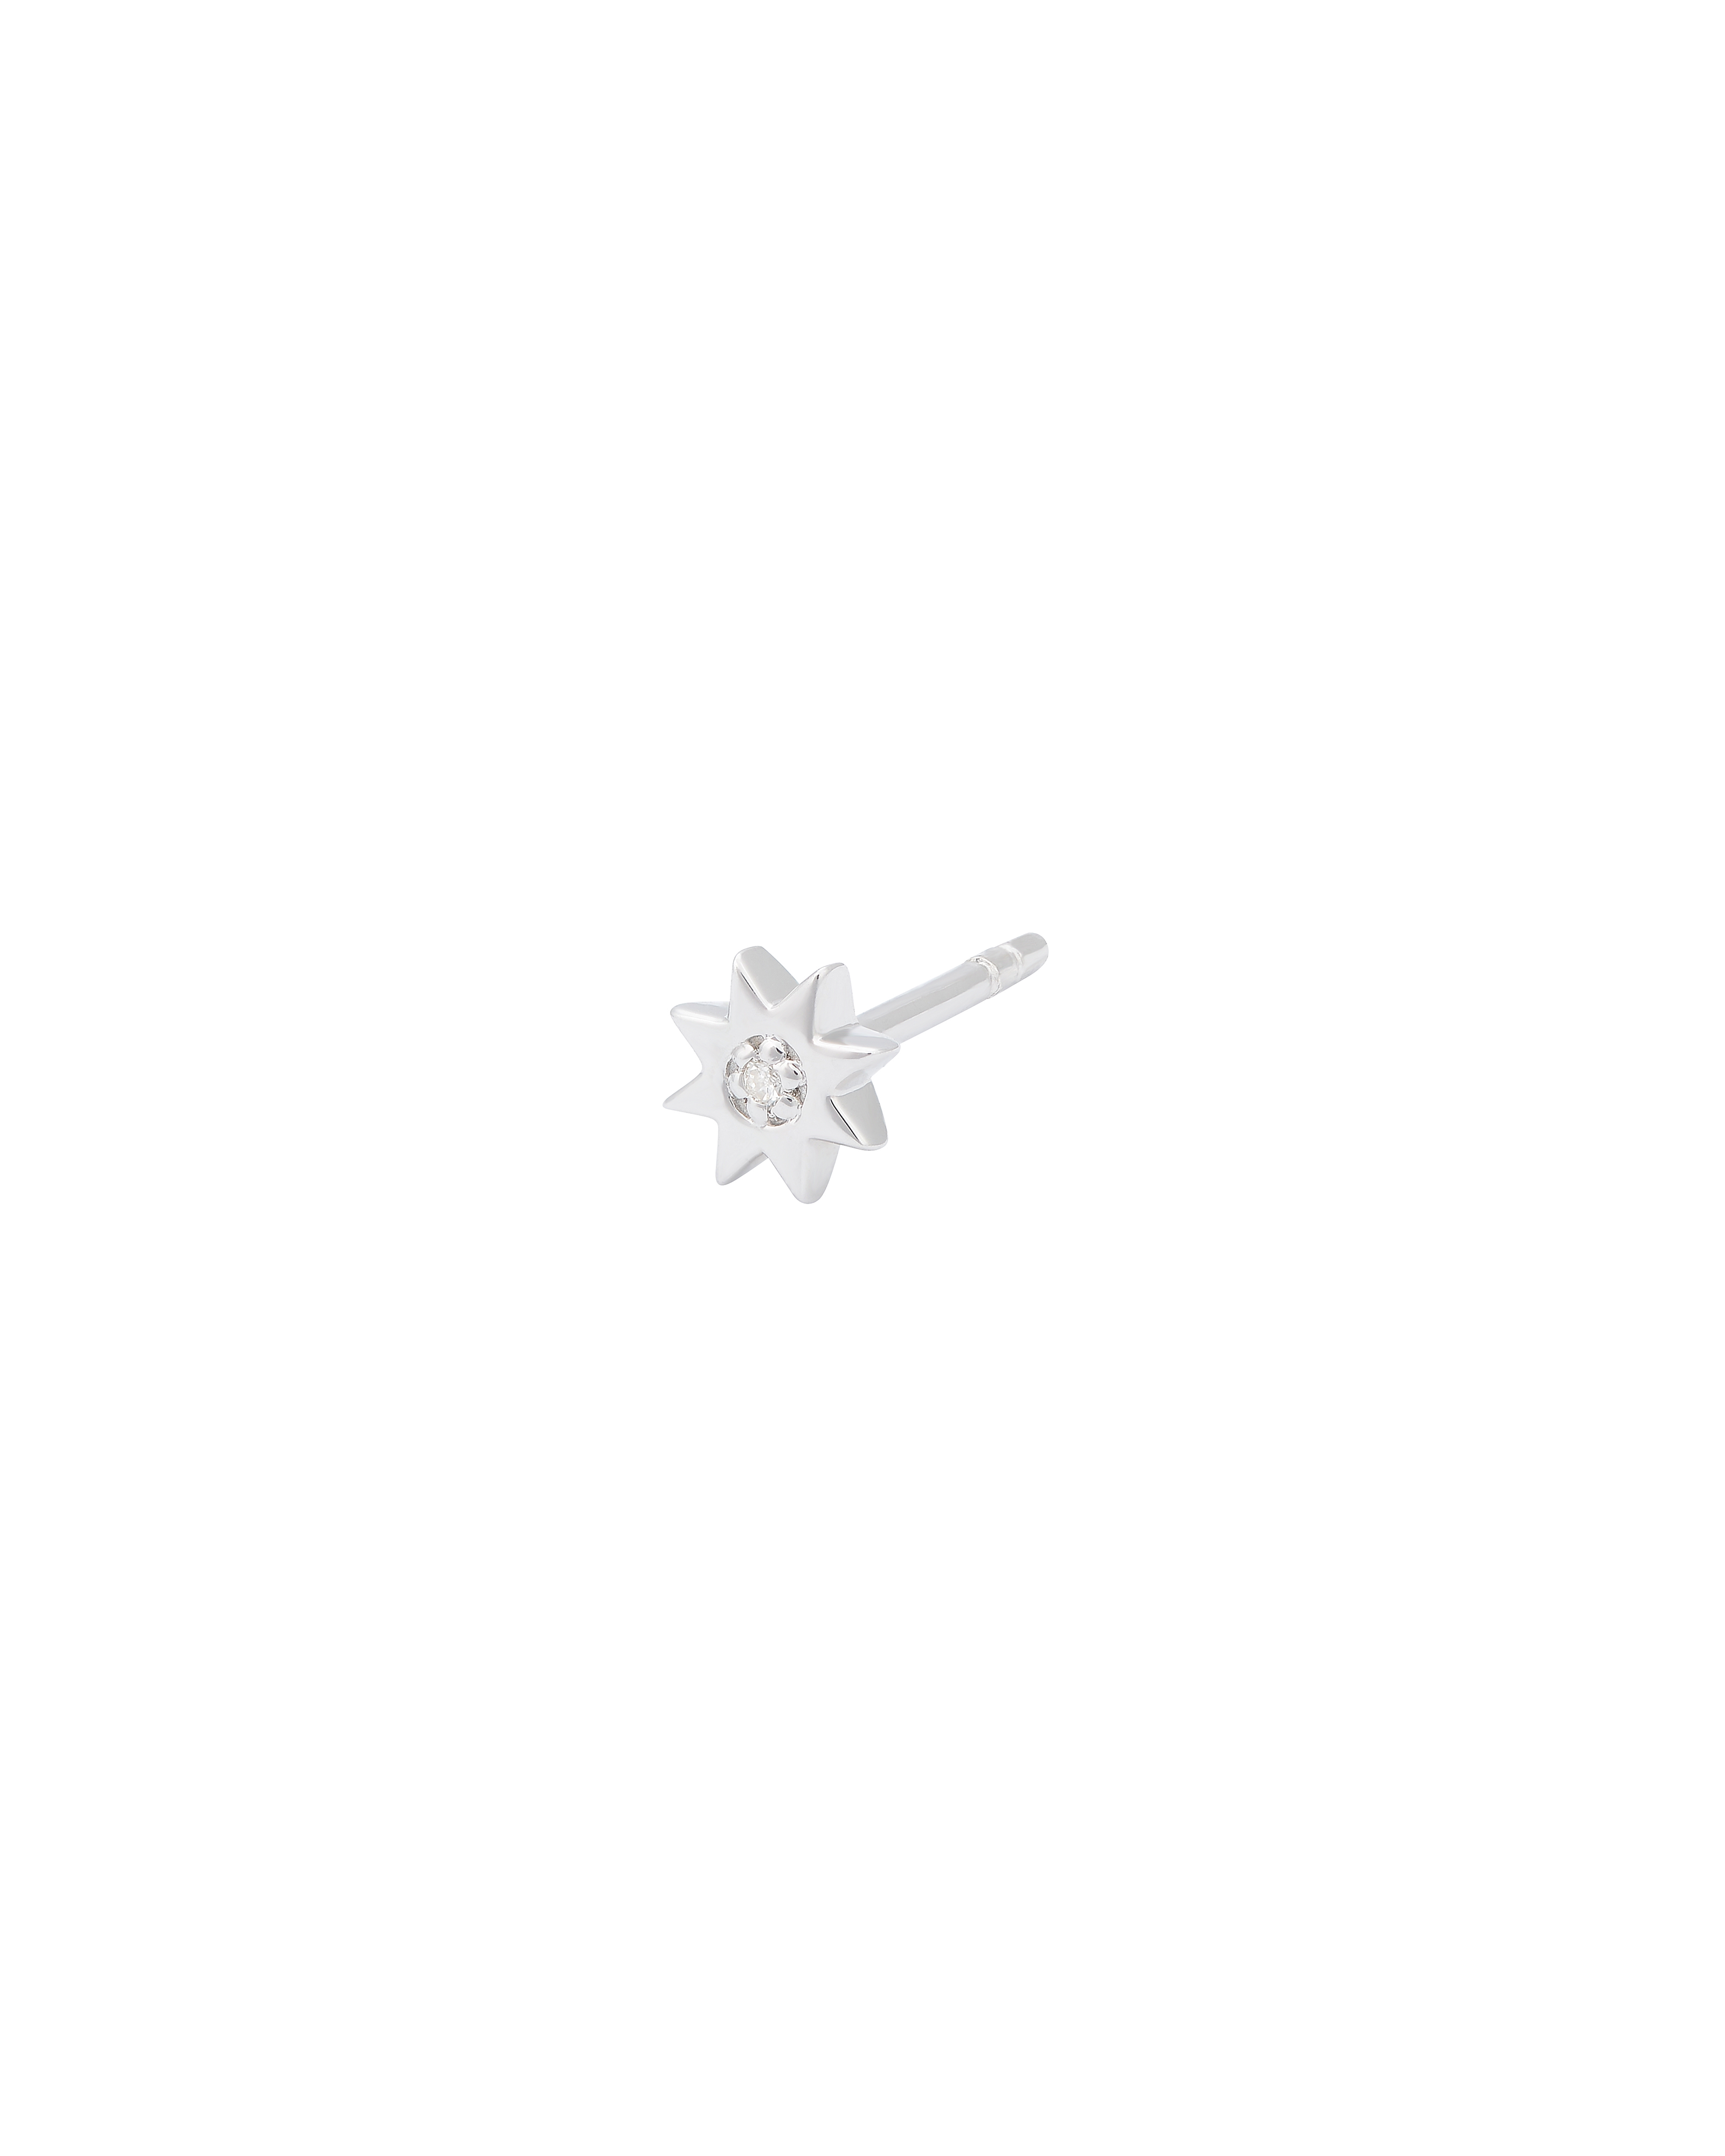    sener-besim-small-constellation-diamond-stud-silver-earrings